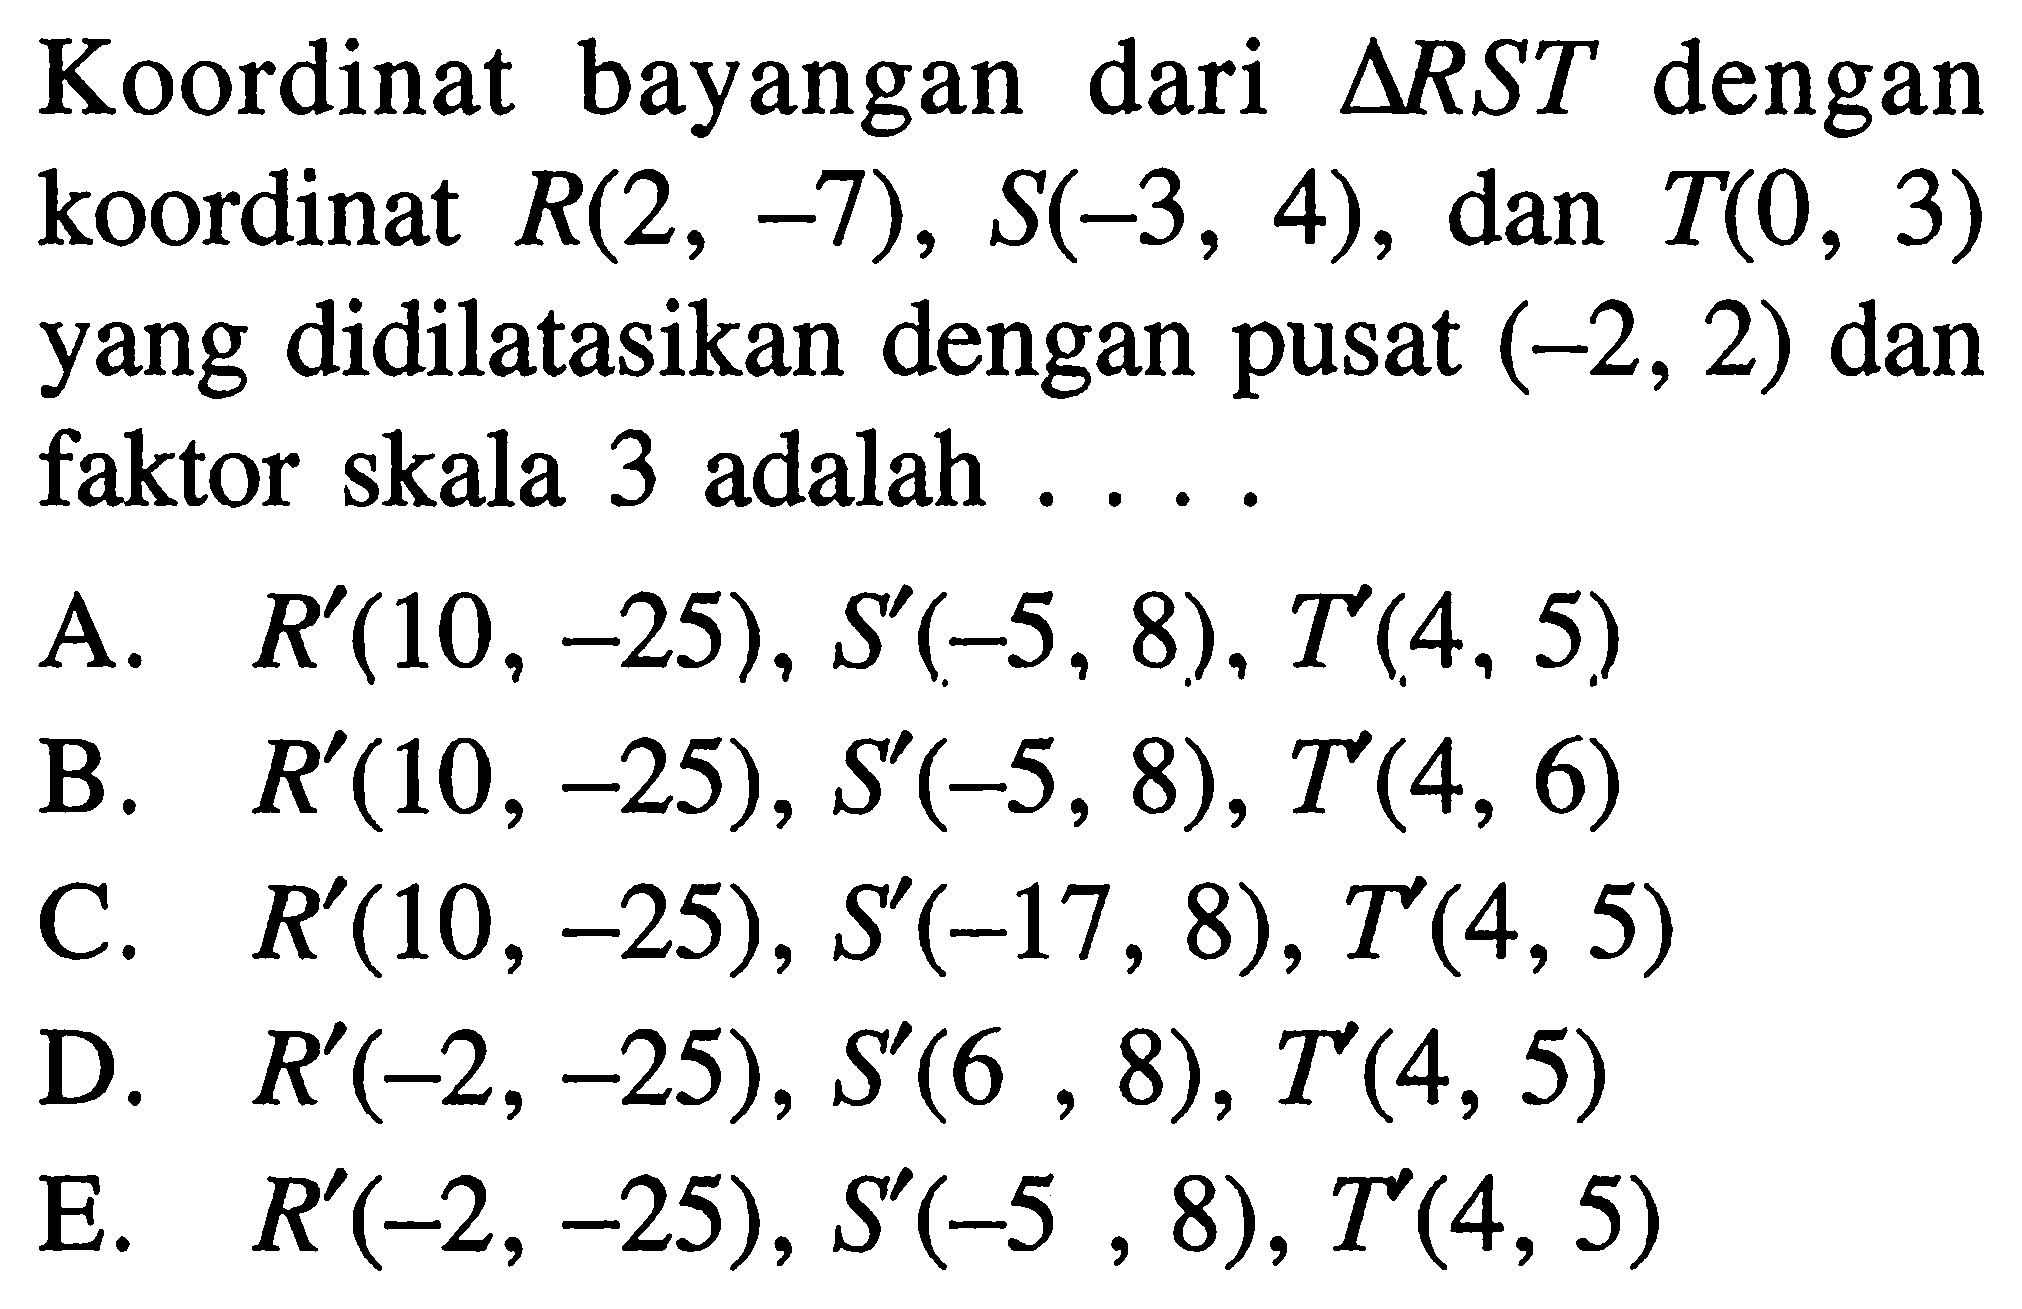 Koordinat bayangan dari segitiga RST dengan koordinat R(2, -7), S(-3, 4), dan T(0 , 3) yang didilatasikan dengan pusat (-2, 2) dan faktor skala 3 adalah ...